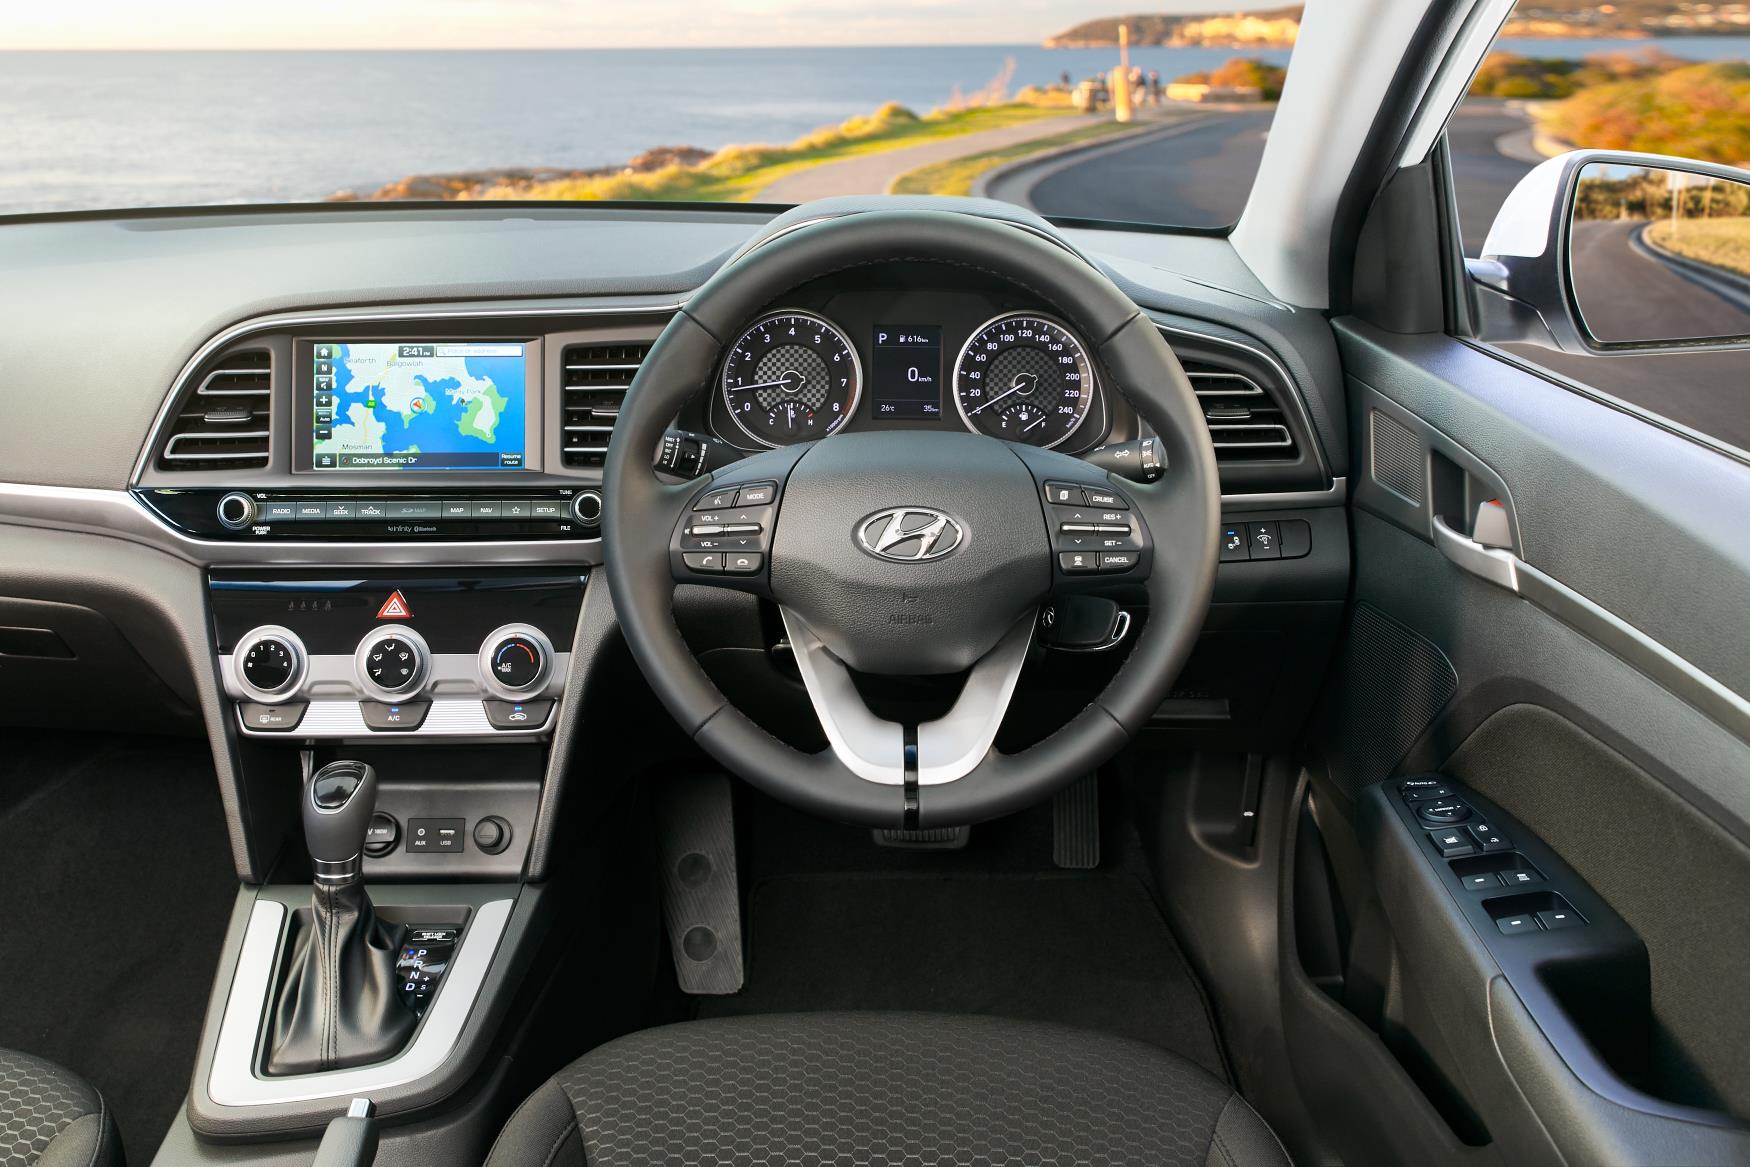 2019 Hyundai Elantra On Sale In Australia Go Variant Added